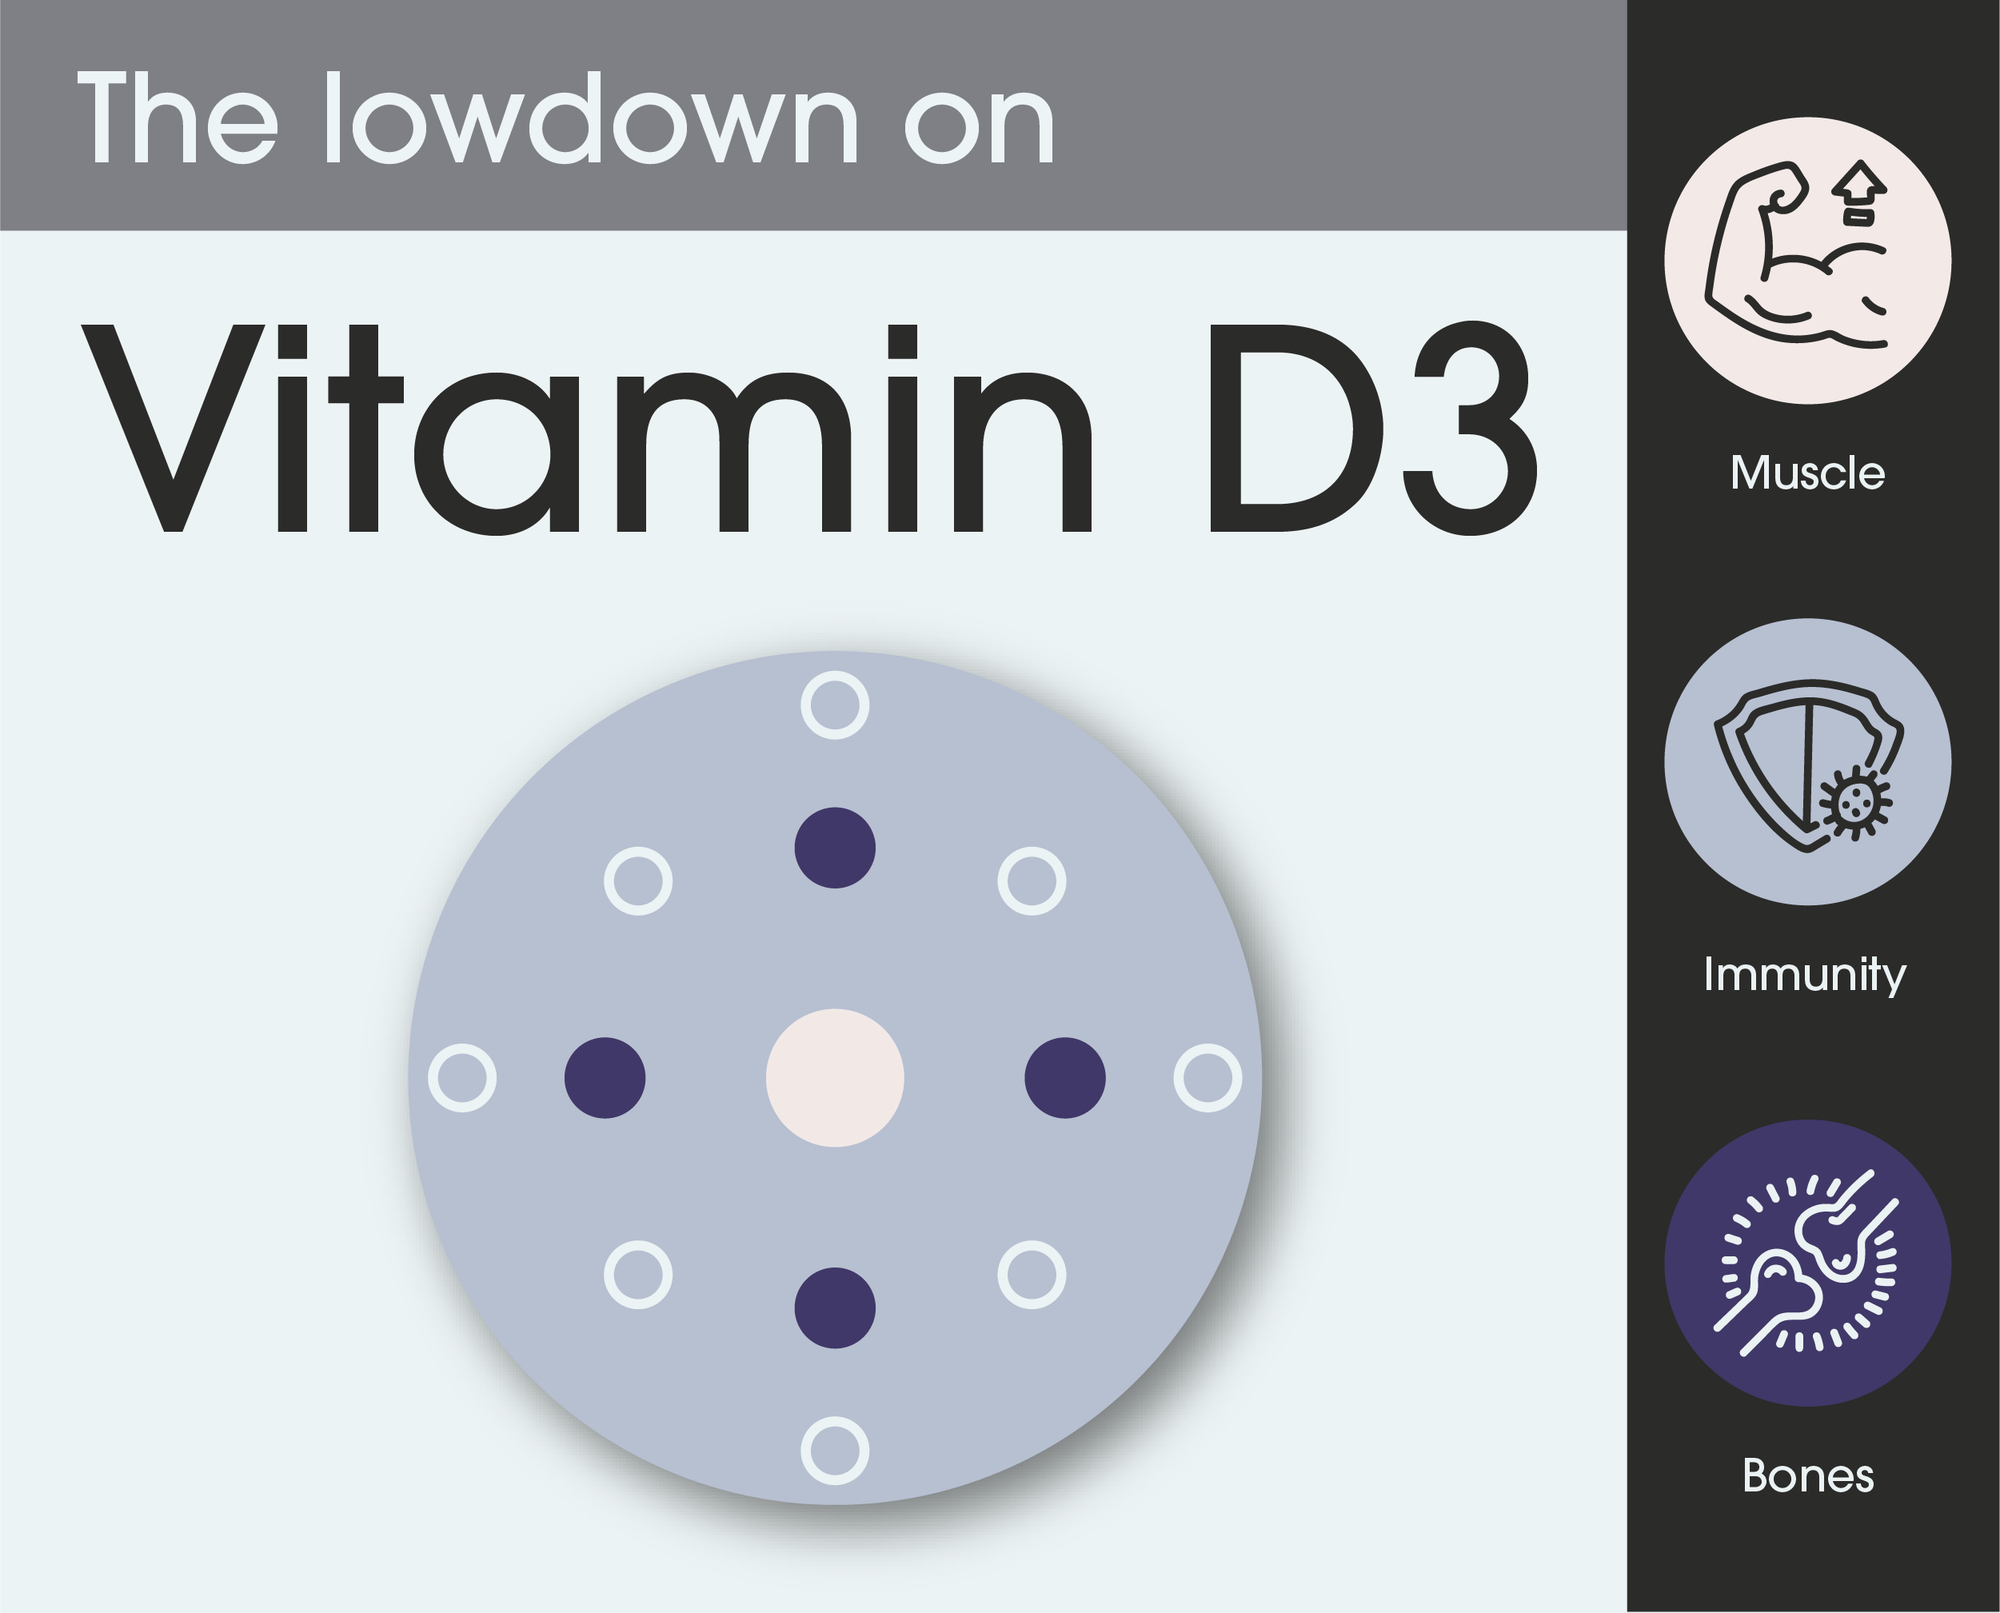 The lowdown on Vitamin D3